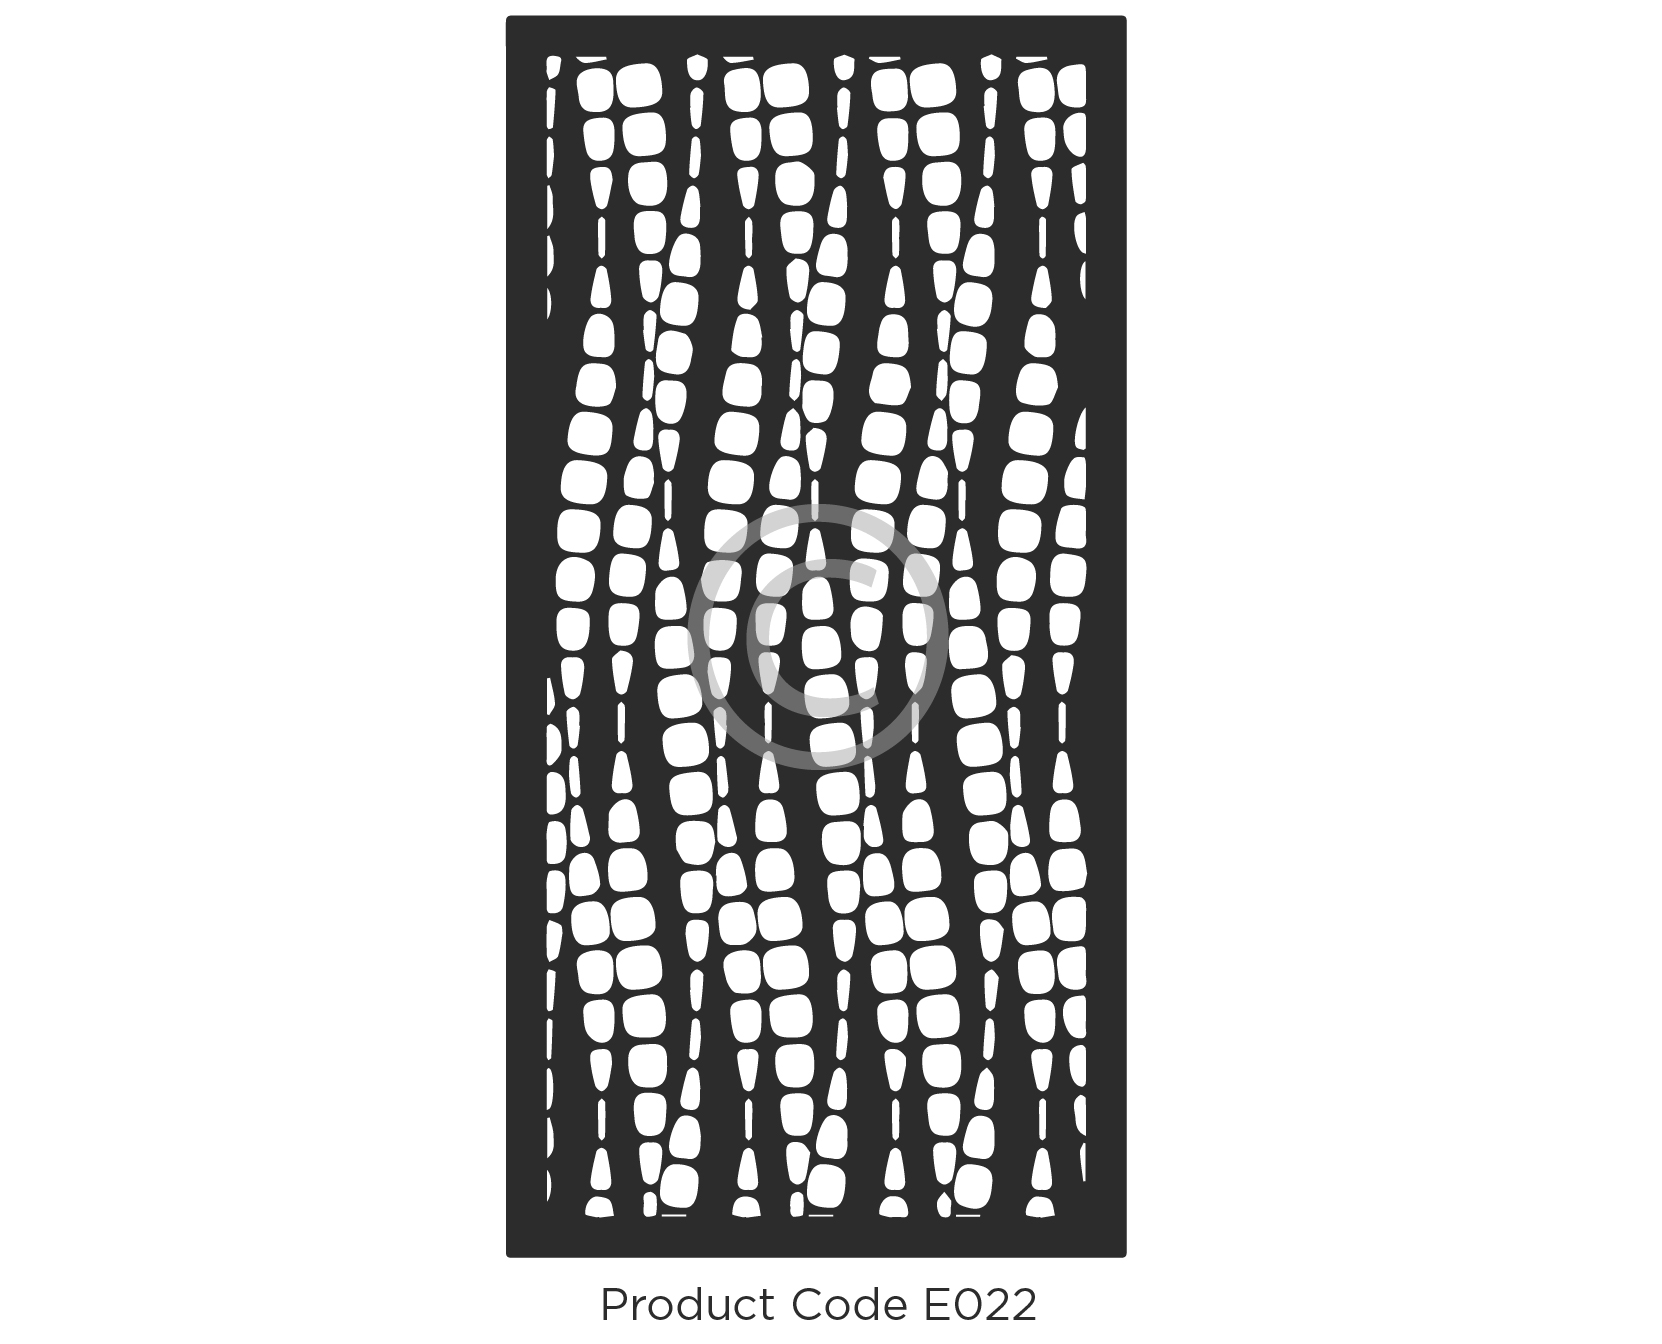 Elysium Decorative Screen Product Code E022 Organic Design of microscopic pattern